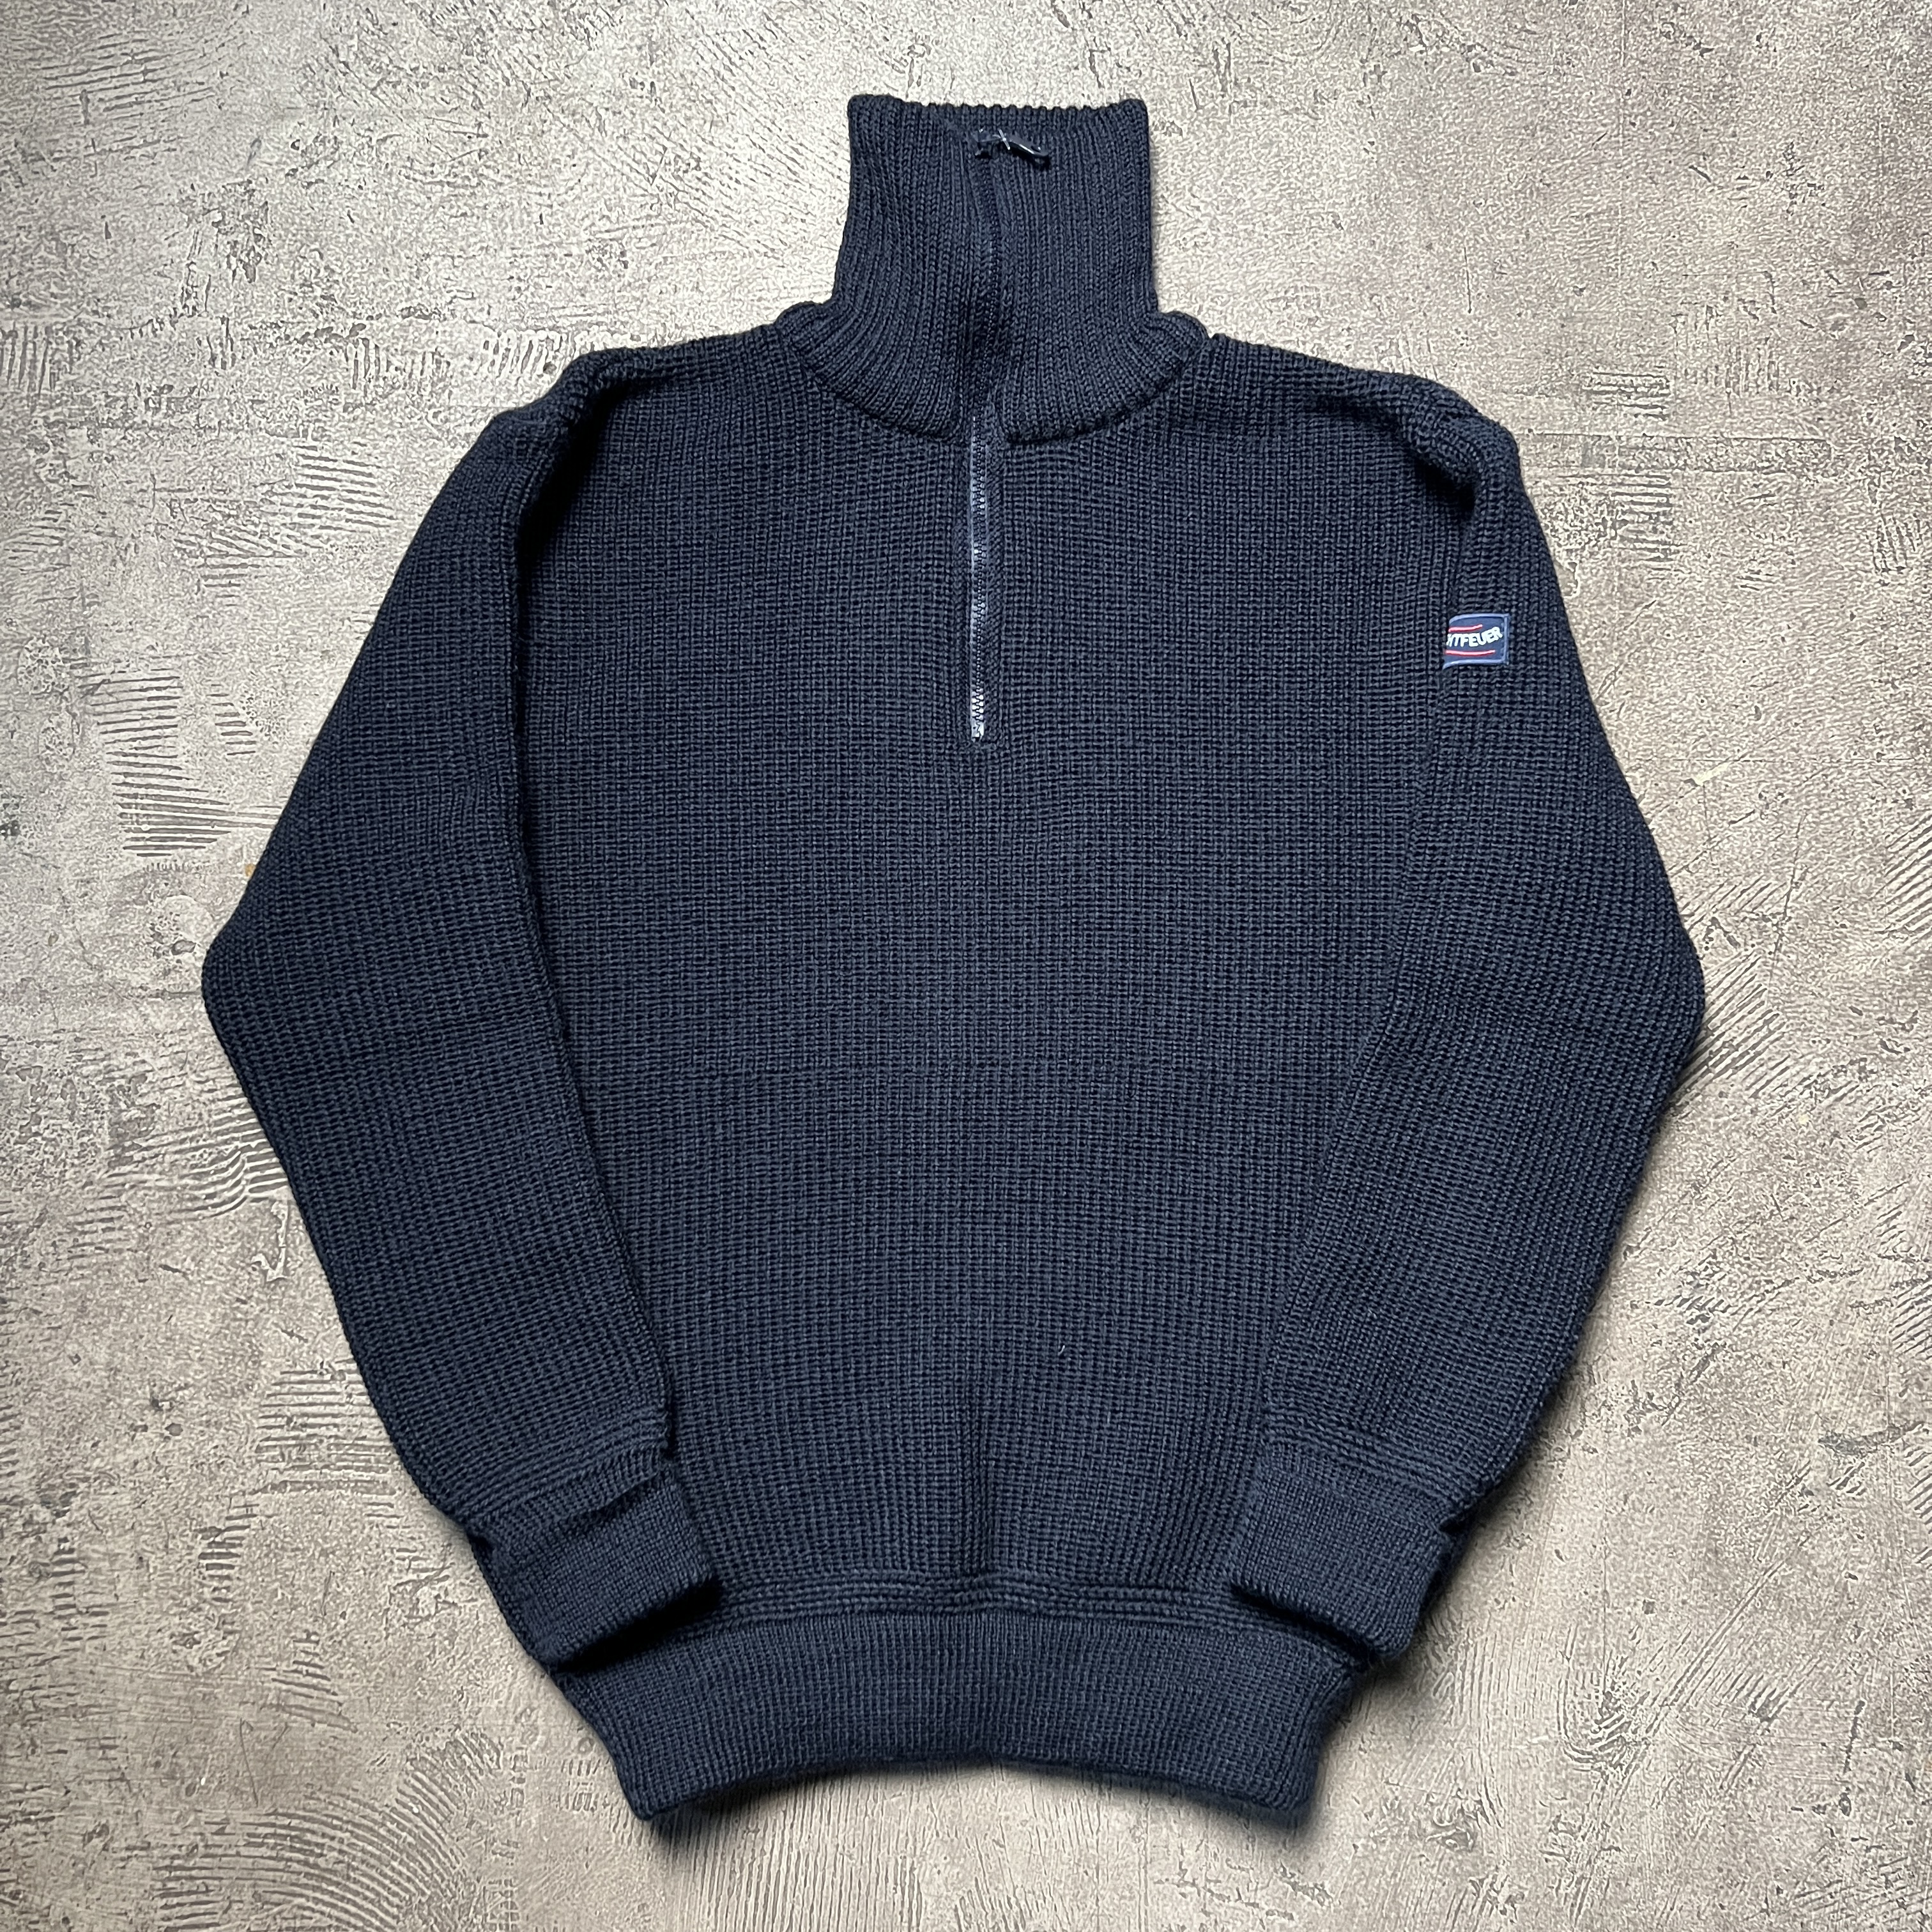 LEUCHTFEUER "1068 Sweater"